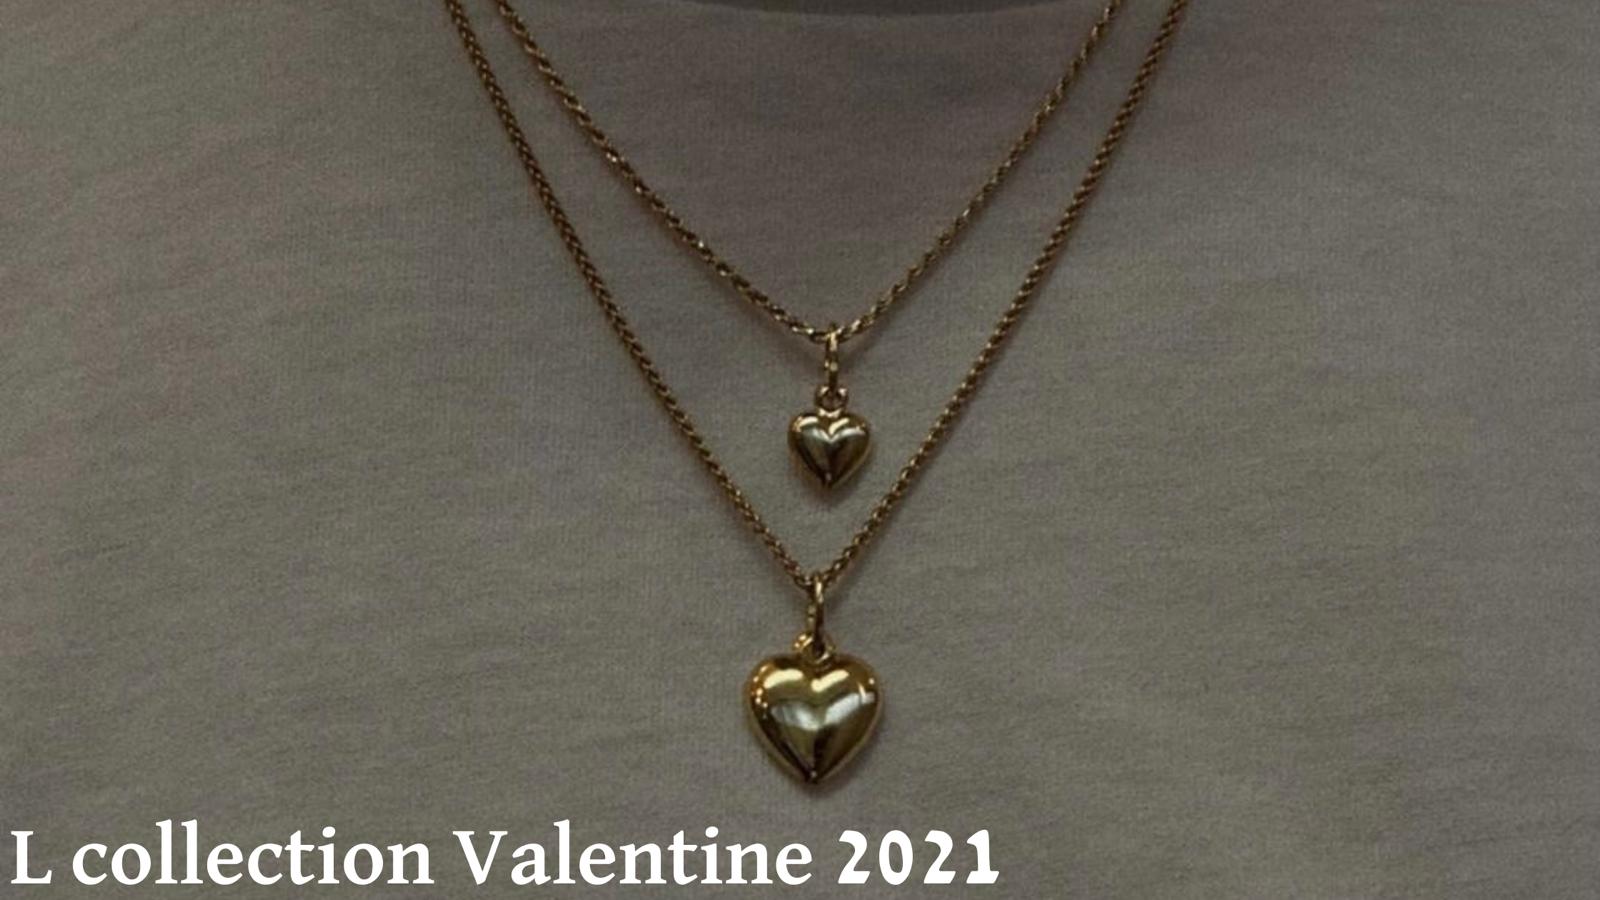 L collection Valentine 2021 - מיכל בן עמי